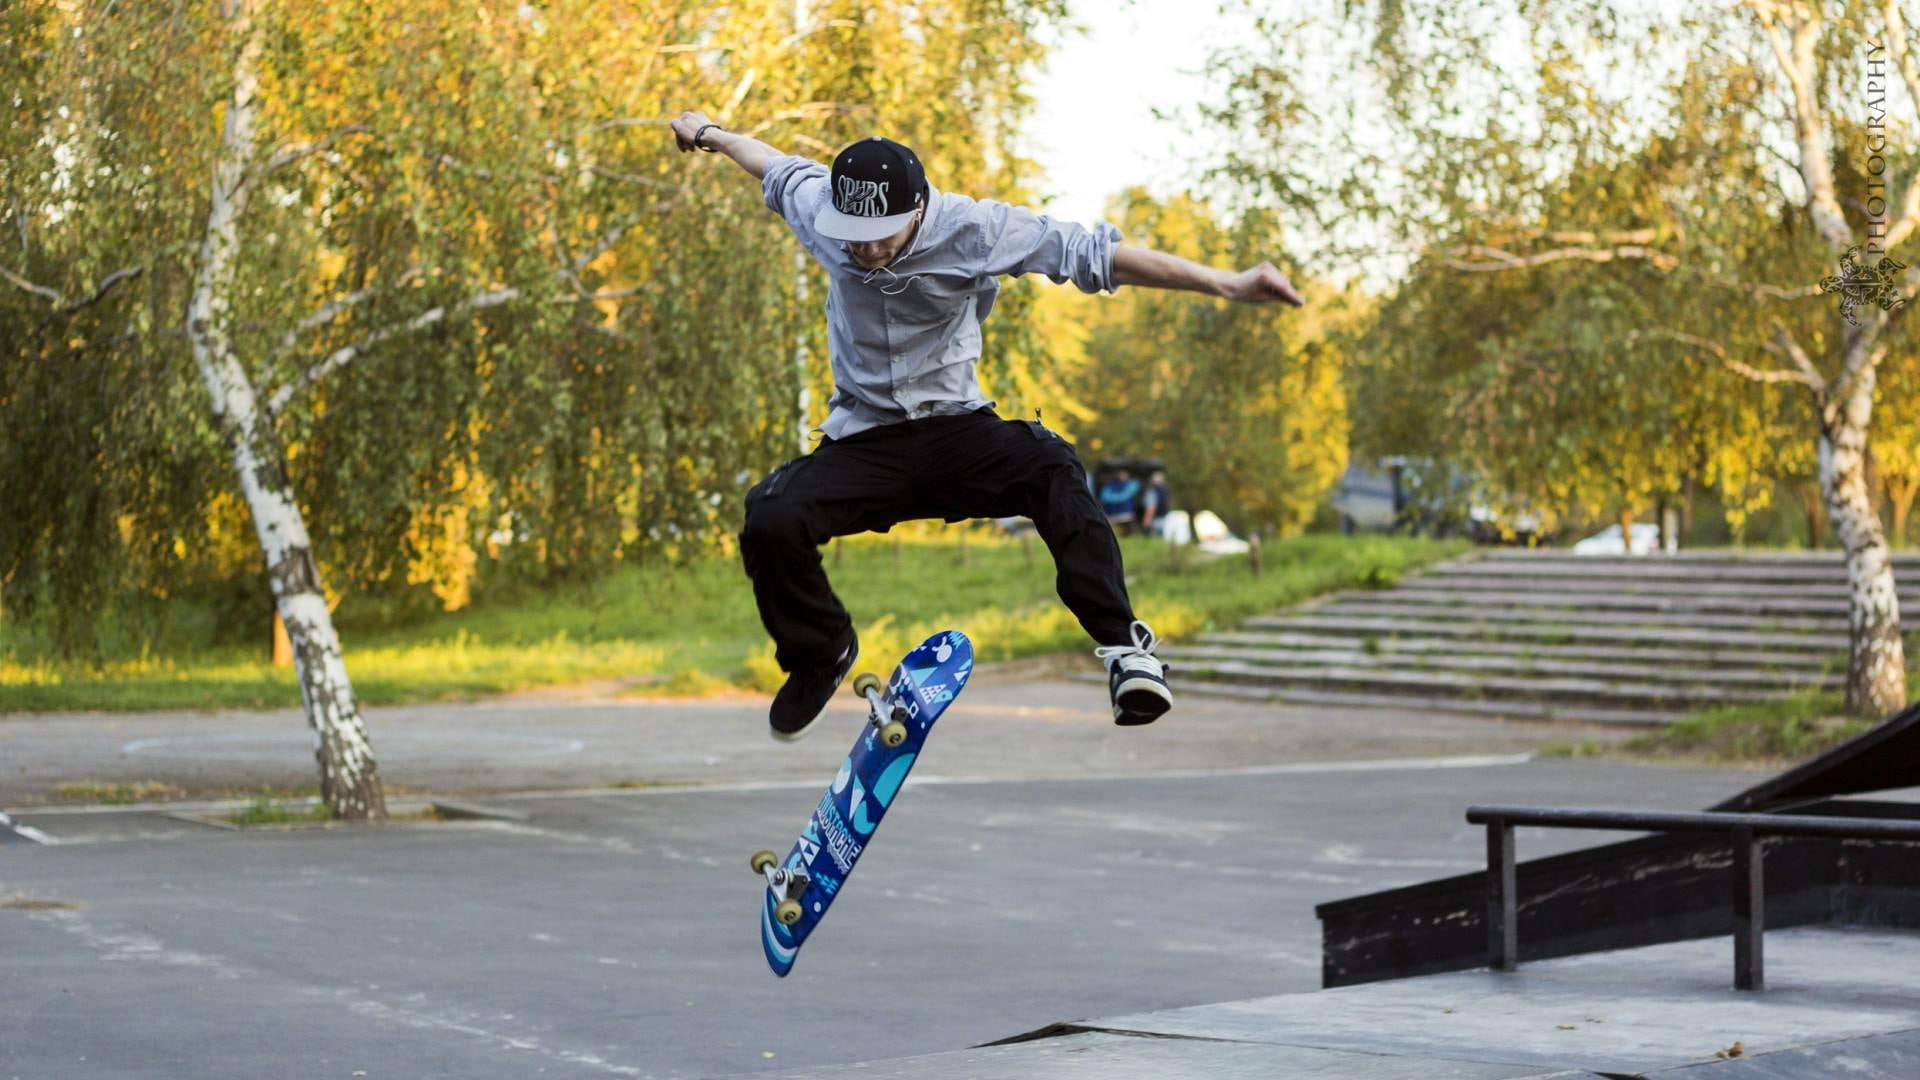 Skateboard kickflip, selective photograph of skater boy jumping